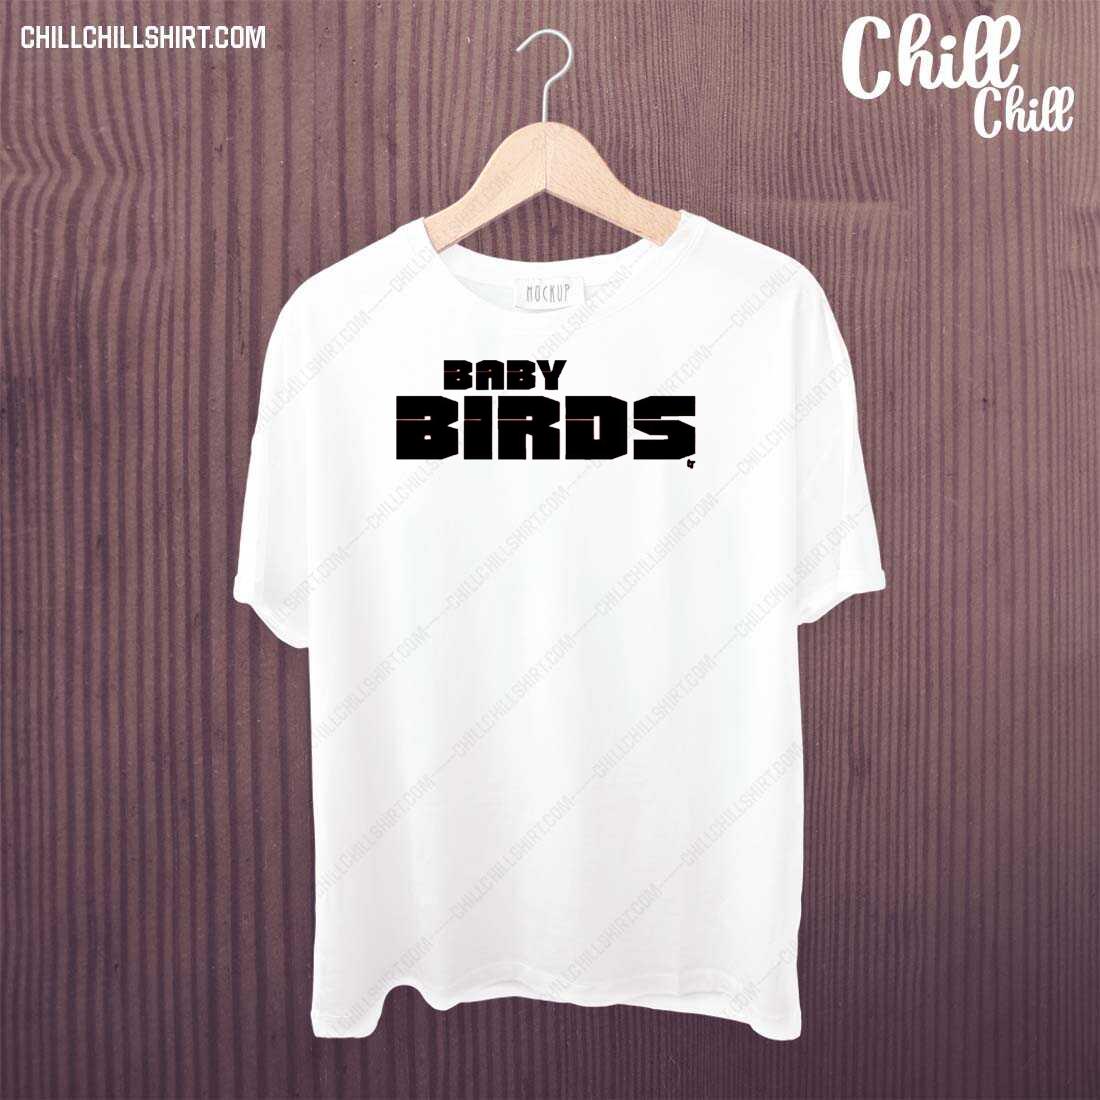 Nice baltimore Baseball Baby Birds T-shirt